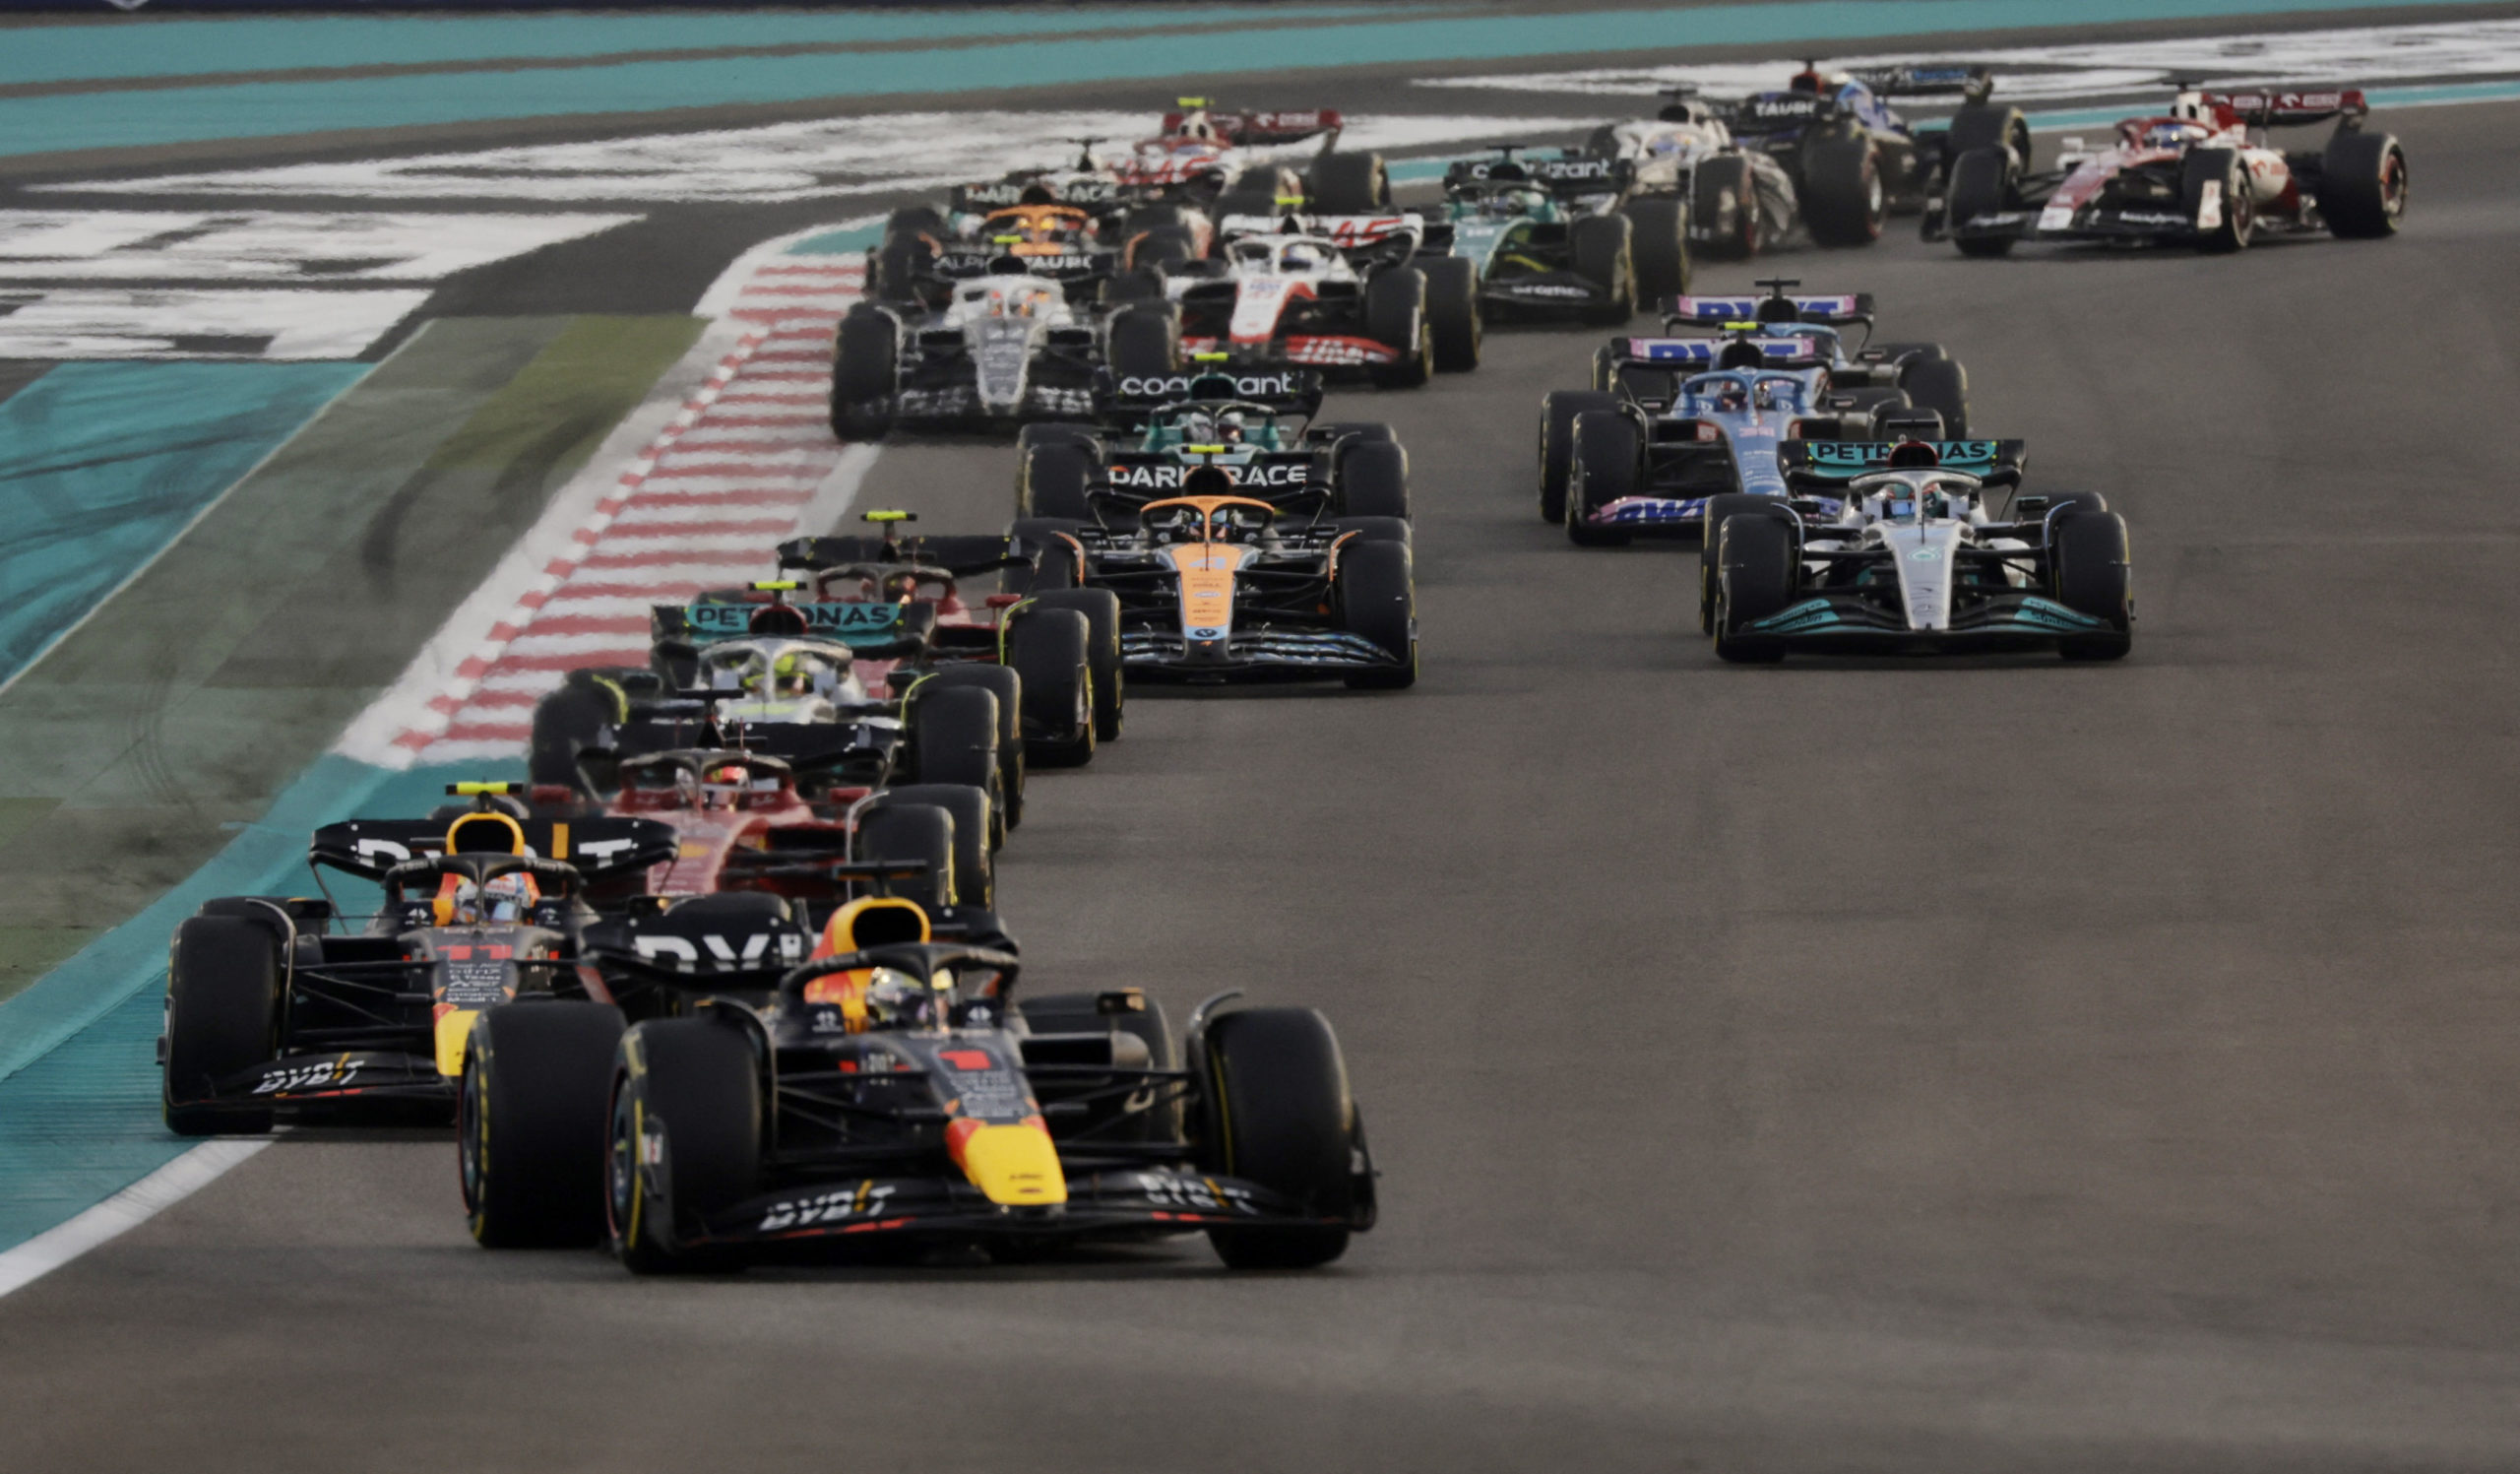 Abu Dhabi Grand Prix - Yas Marina Circuit, Abu Dhabi, United Arab Emirates - November 20, 2022 Red Bull's Max Verstappen in action at the start of the race 